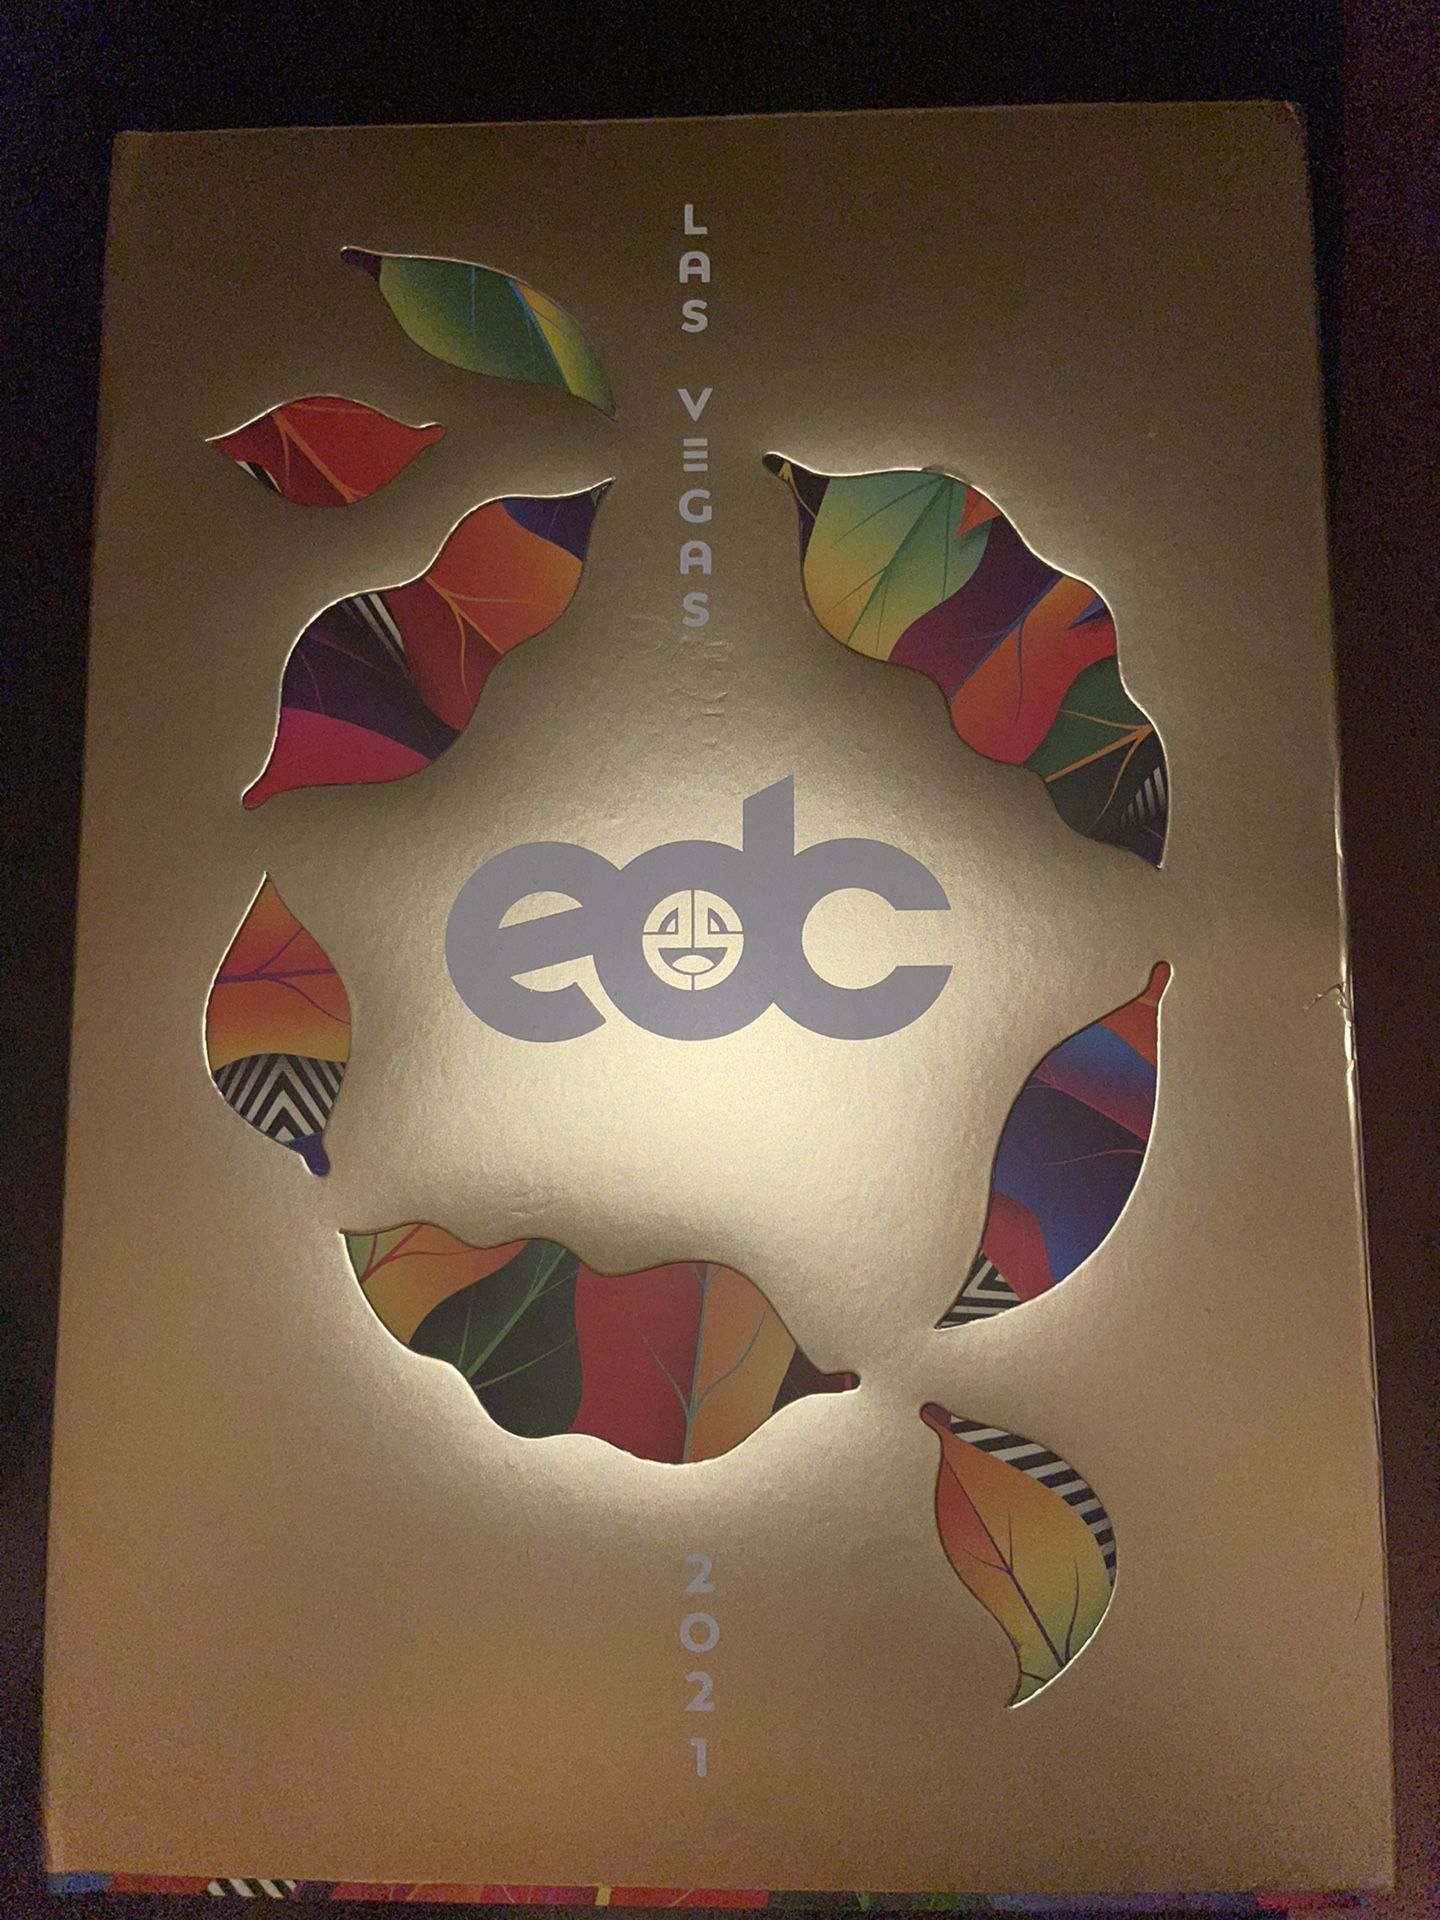 EDC GA+ 3 Day Pass $500 OFF ORIGINAL PRICE! SUPER LATE LAST BUY